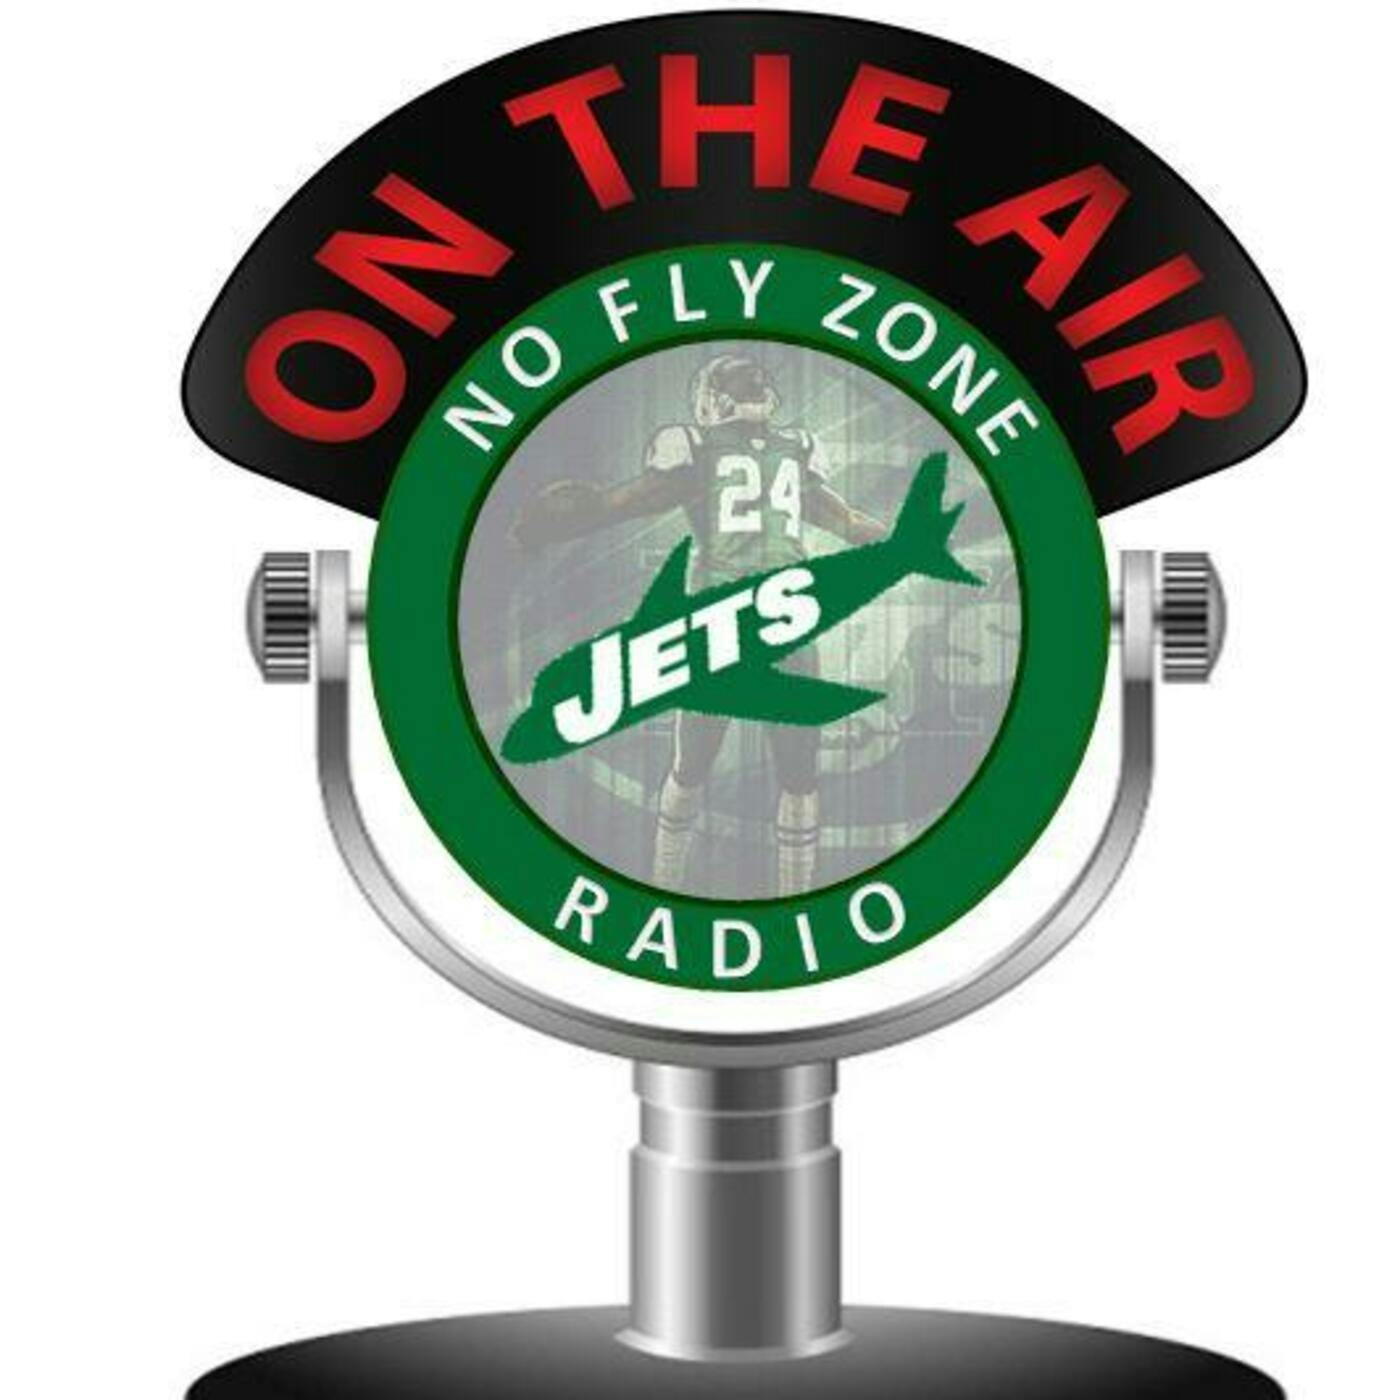 Episode 170: No Fly Zone Radio Episode 170